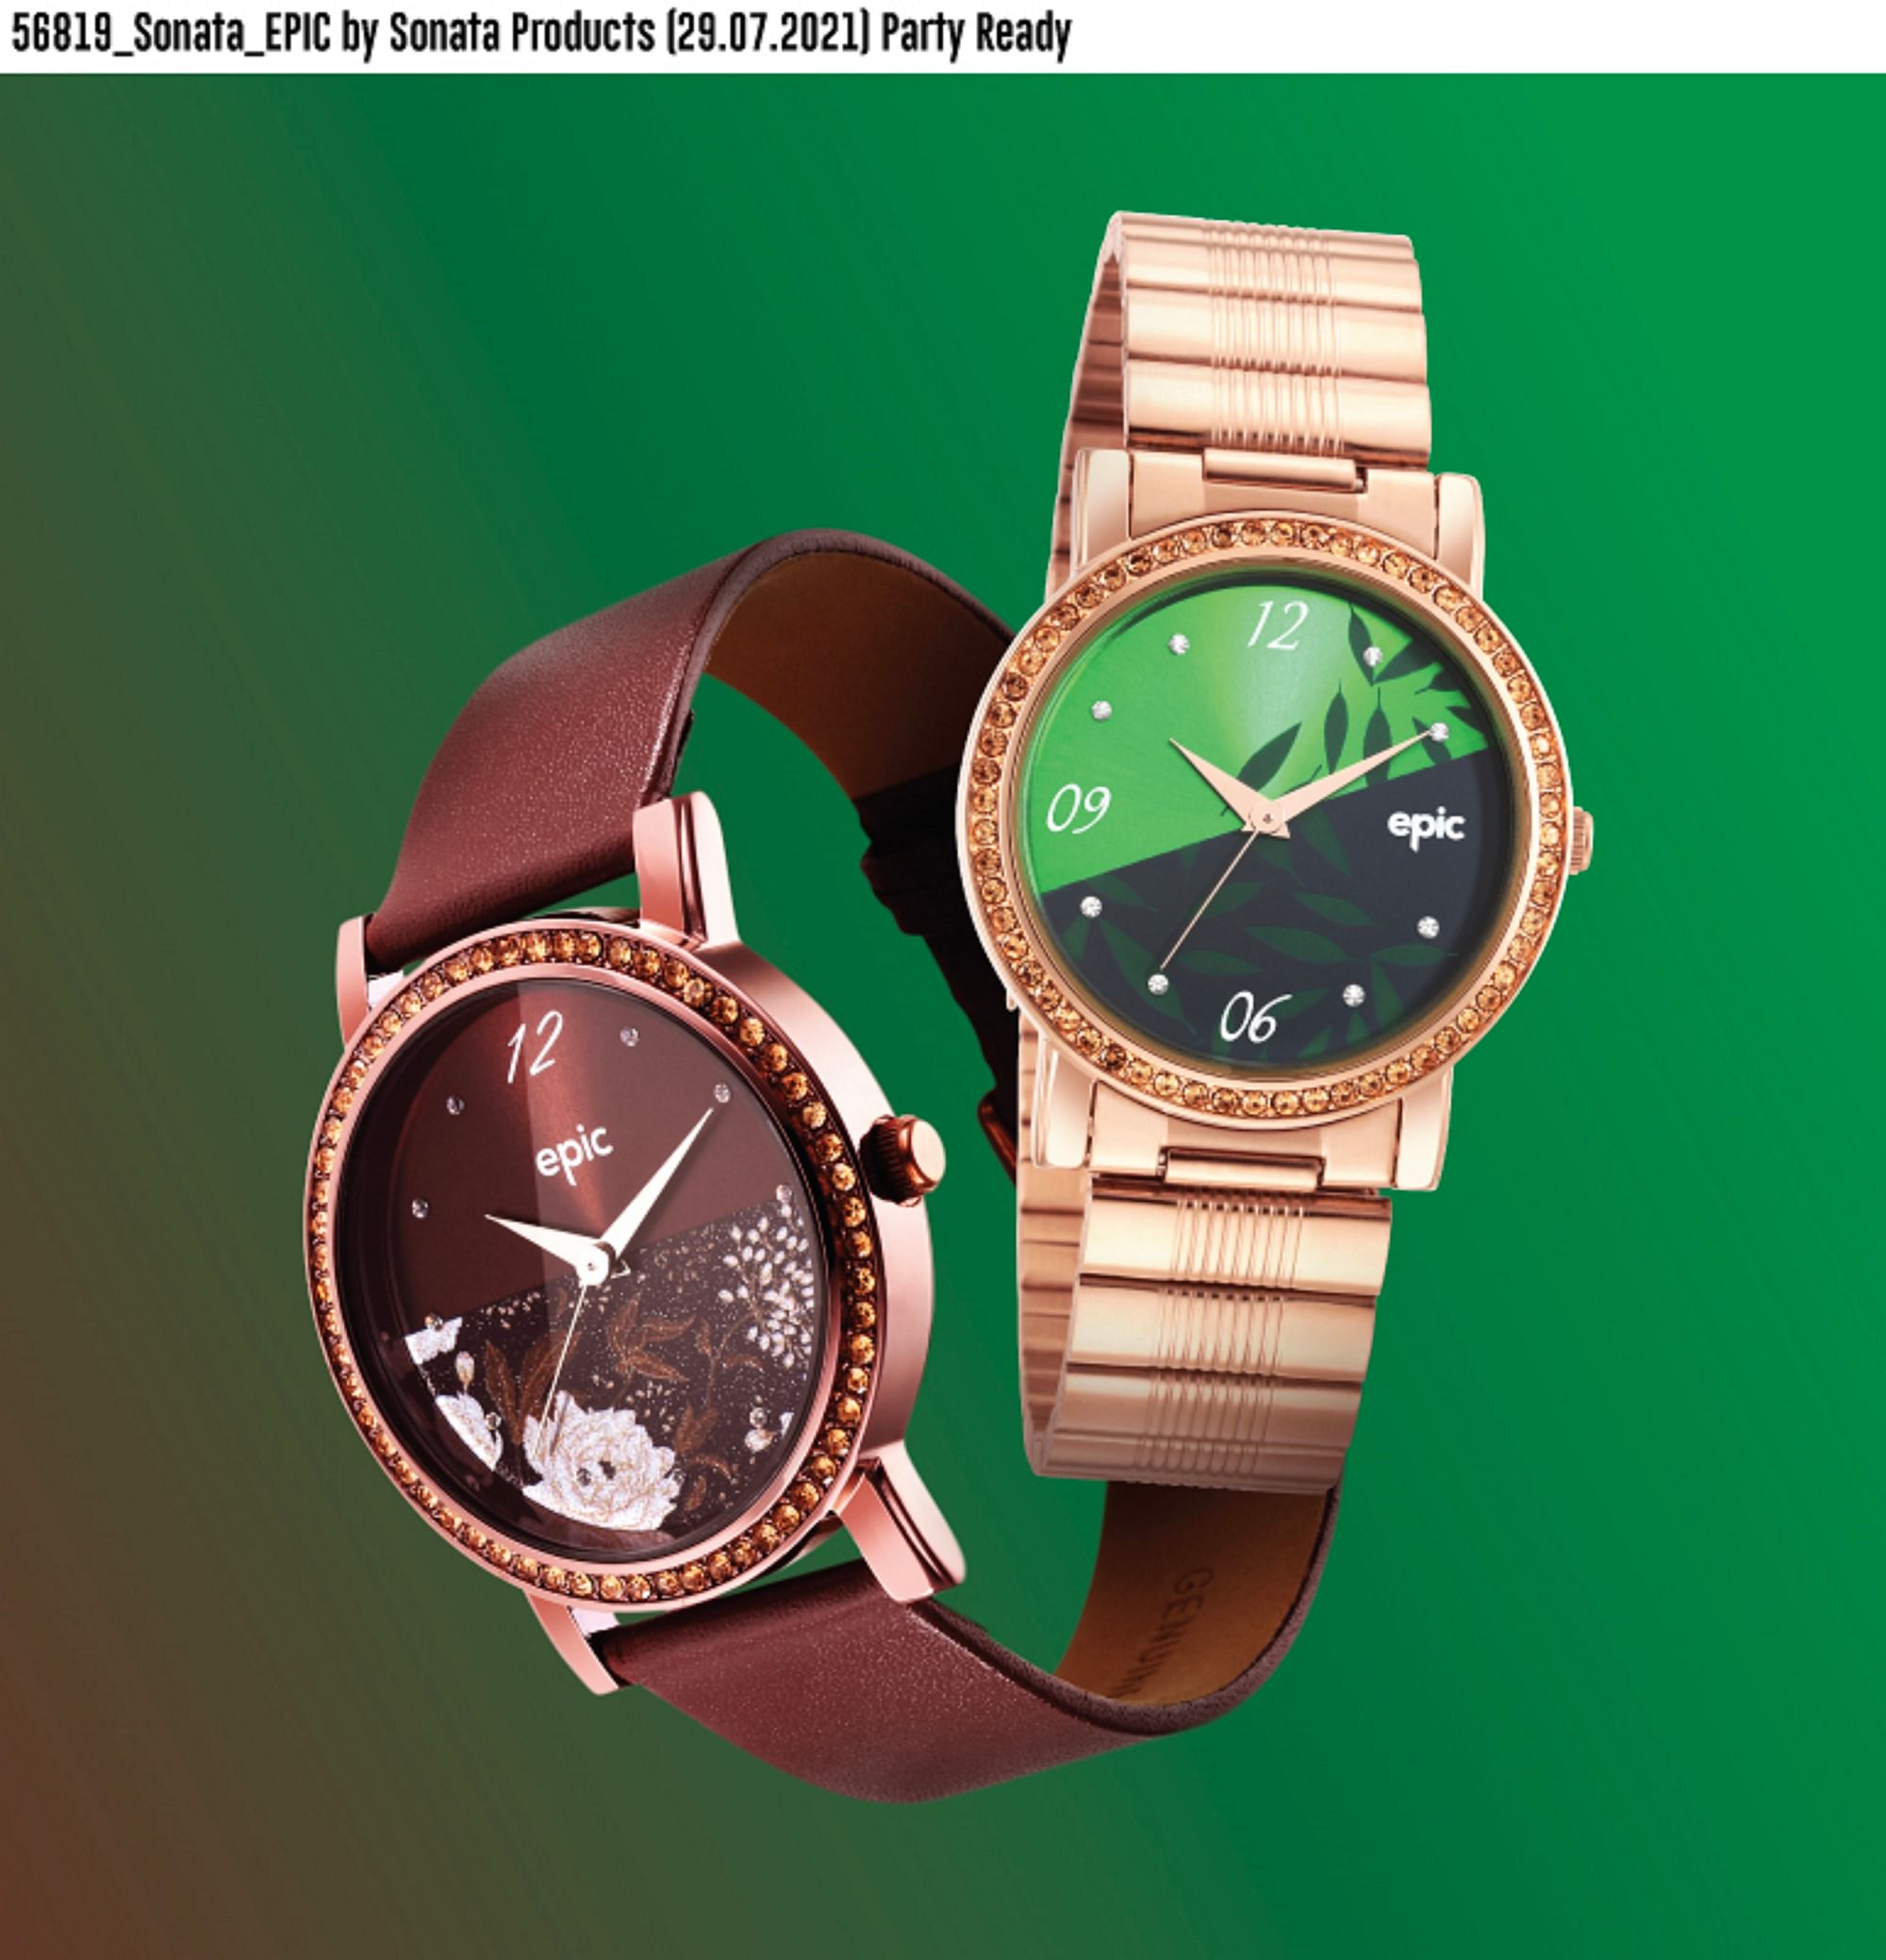 Sonata Watches - Sonata Watches added a new photo.